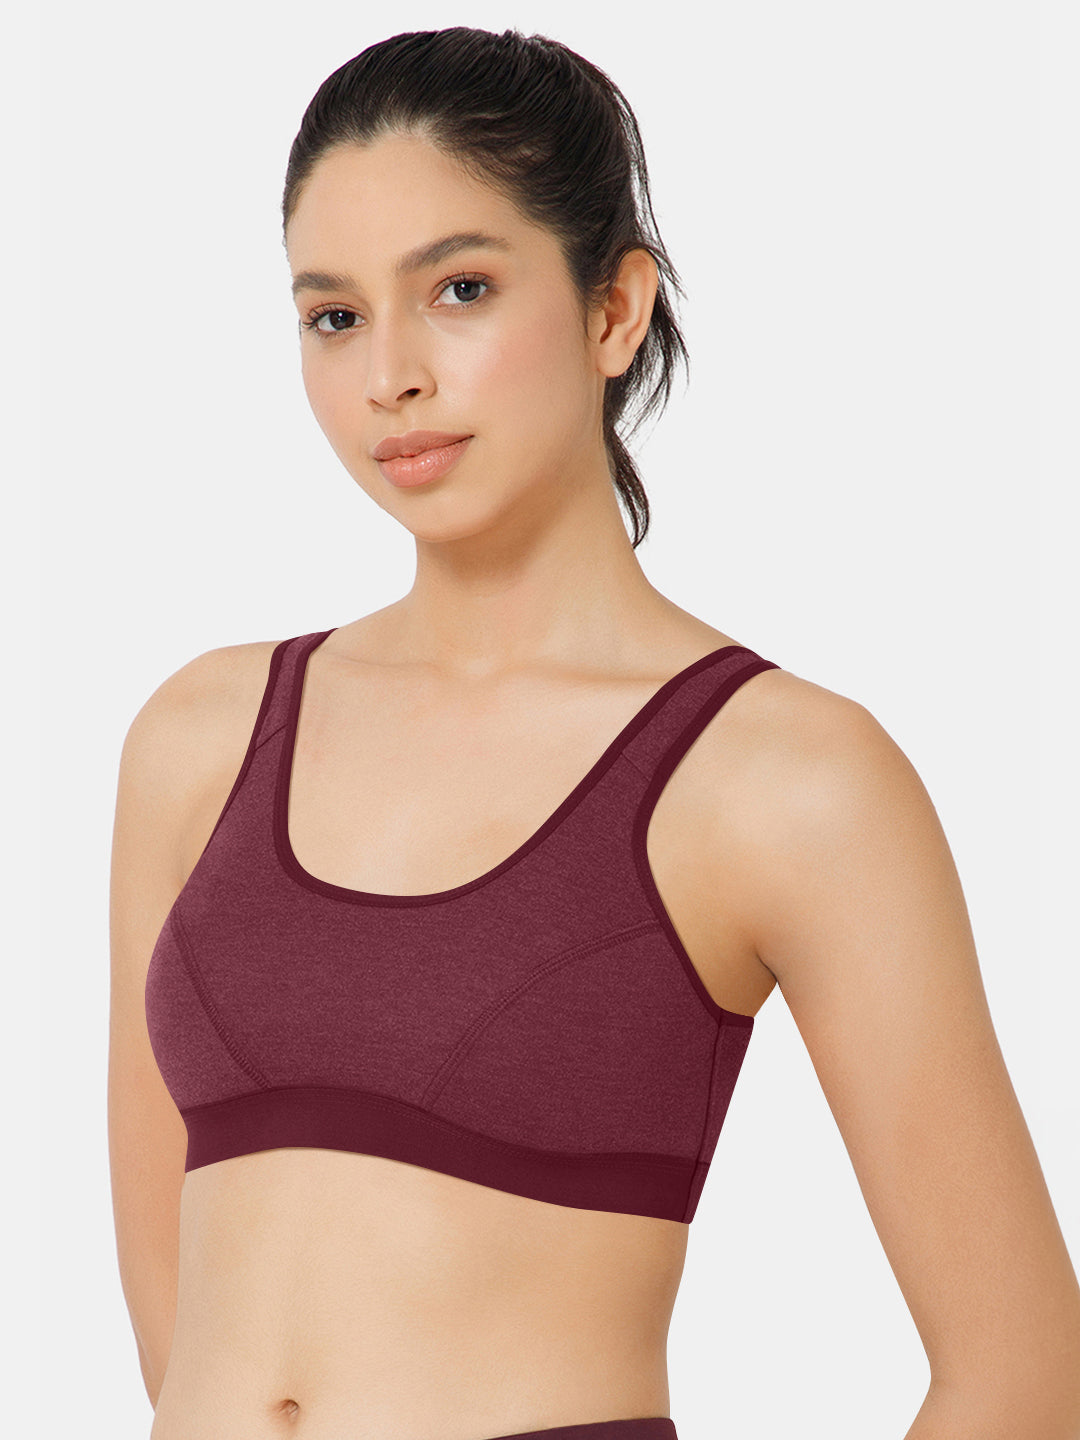 Comfortable plain cotton sports bra For High-Performance 